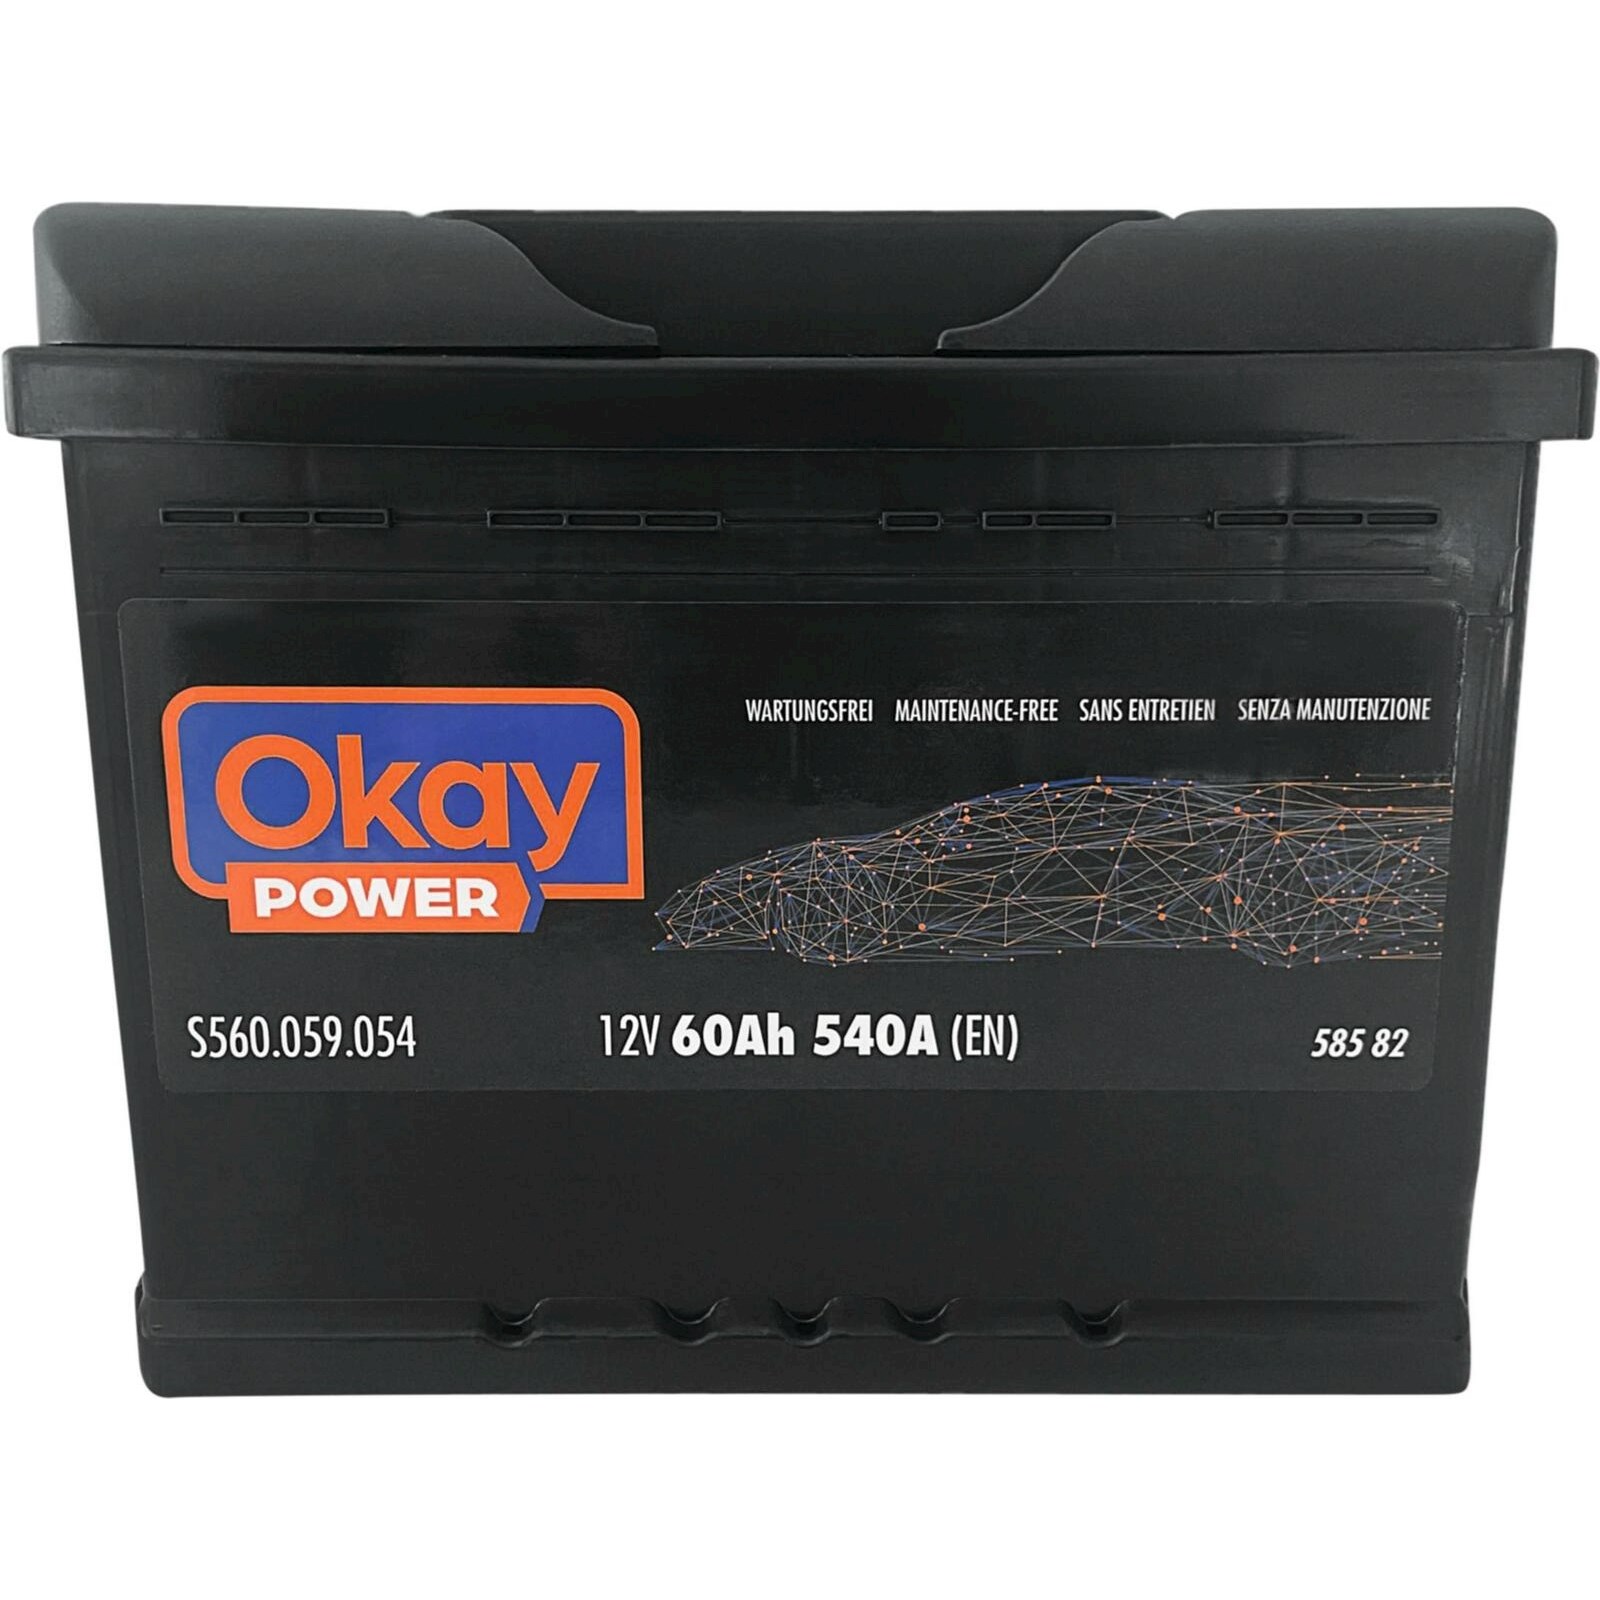 Starterbatterie OKAY Power 60Ah/540A kaufen - Auto Zubehör - LANDI